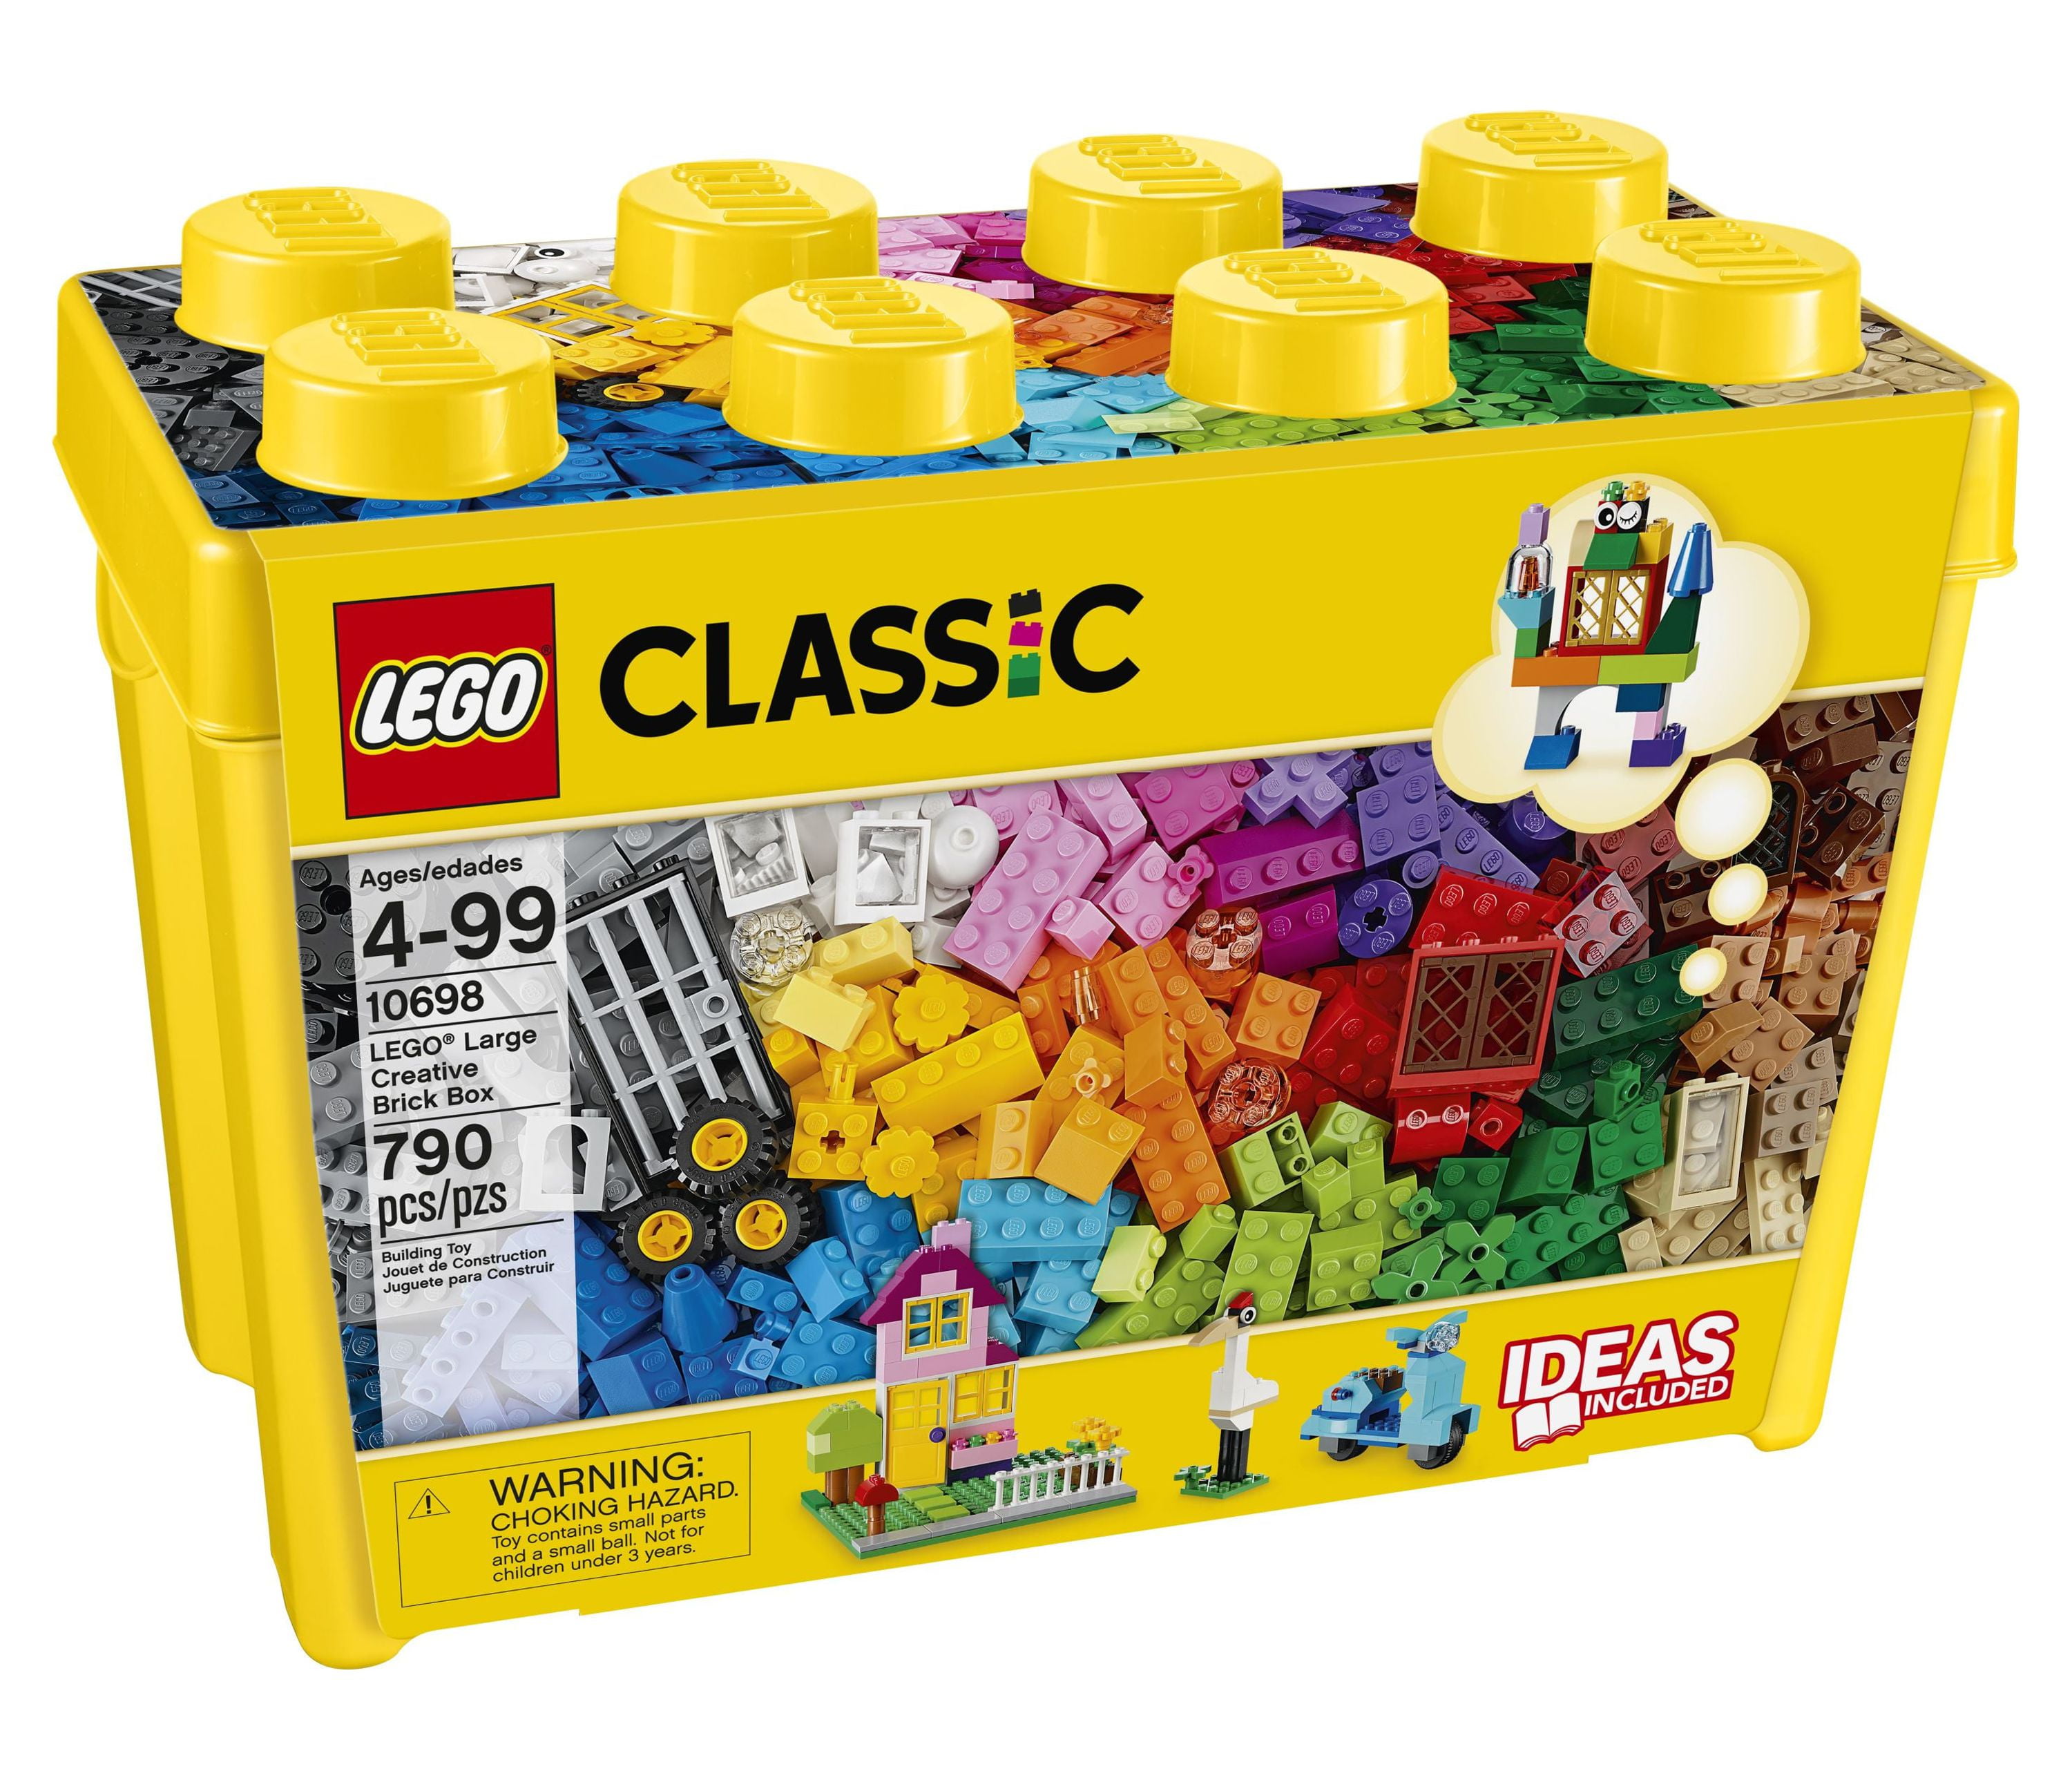 LEGO BINS & Toy Organizer Set Of 2 Large And Small Brick Shaped